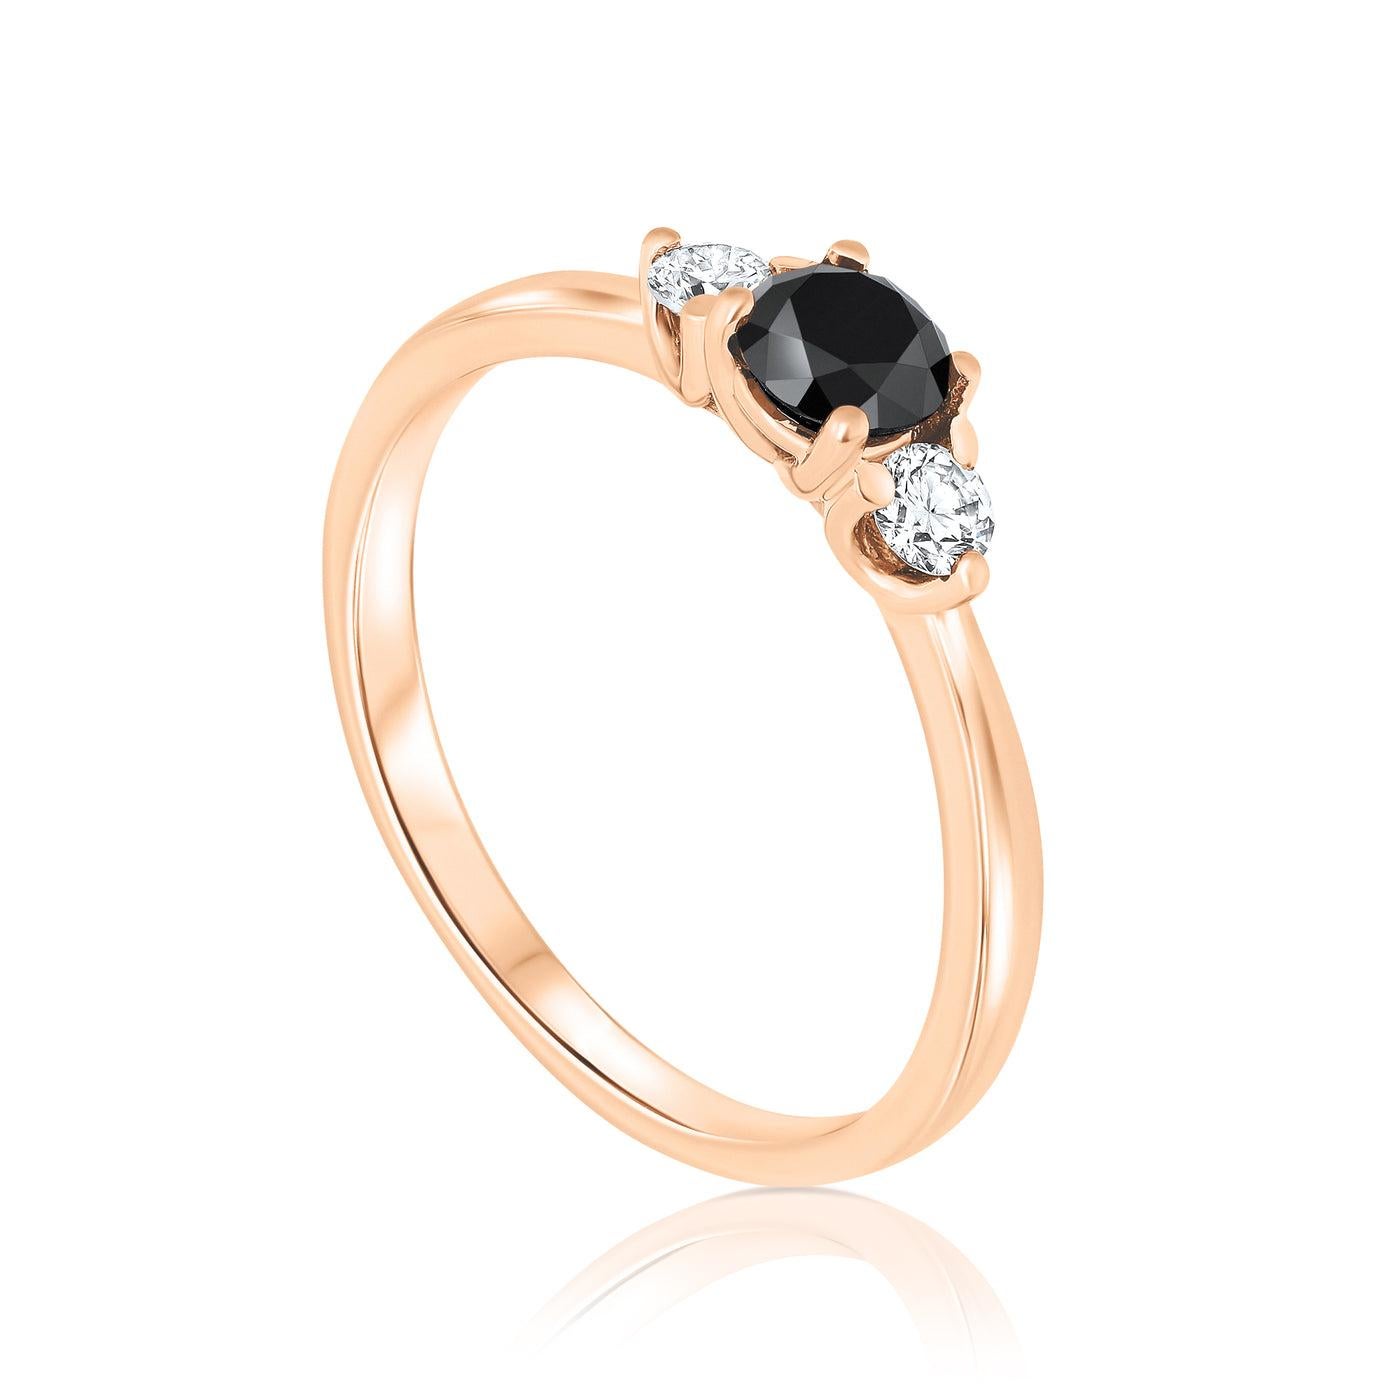 For Sale:  0.40 Carat White and Black Diamond Ring in 14 Karat Rose Gold, Shlomit Rogel 2